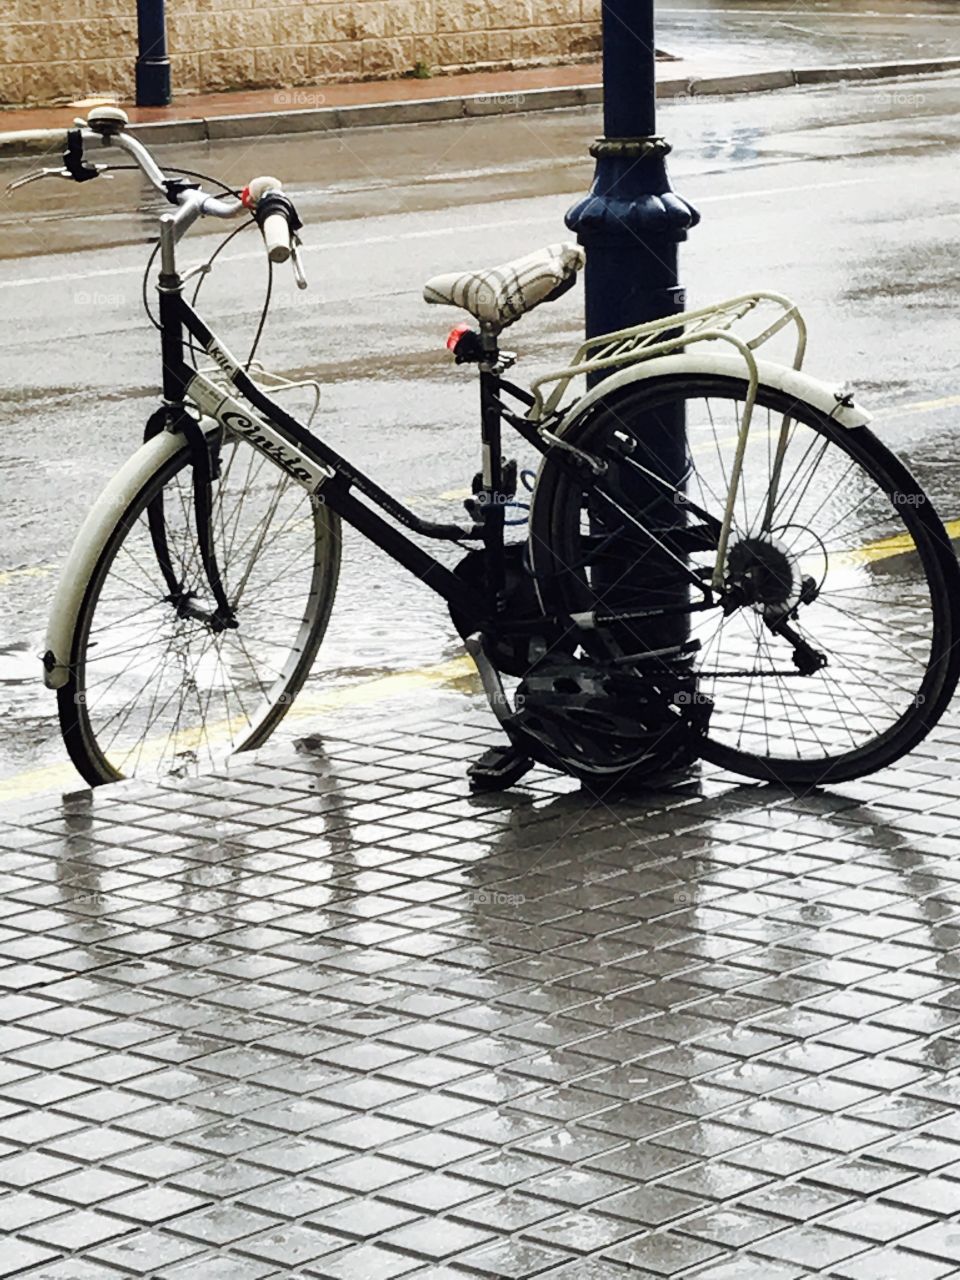 Bicycle-rides-rain-wet-post-wheel 